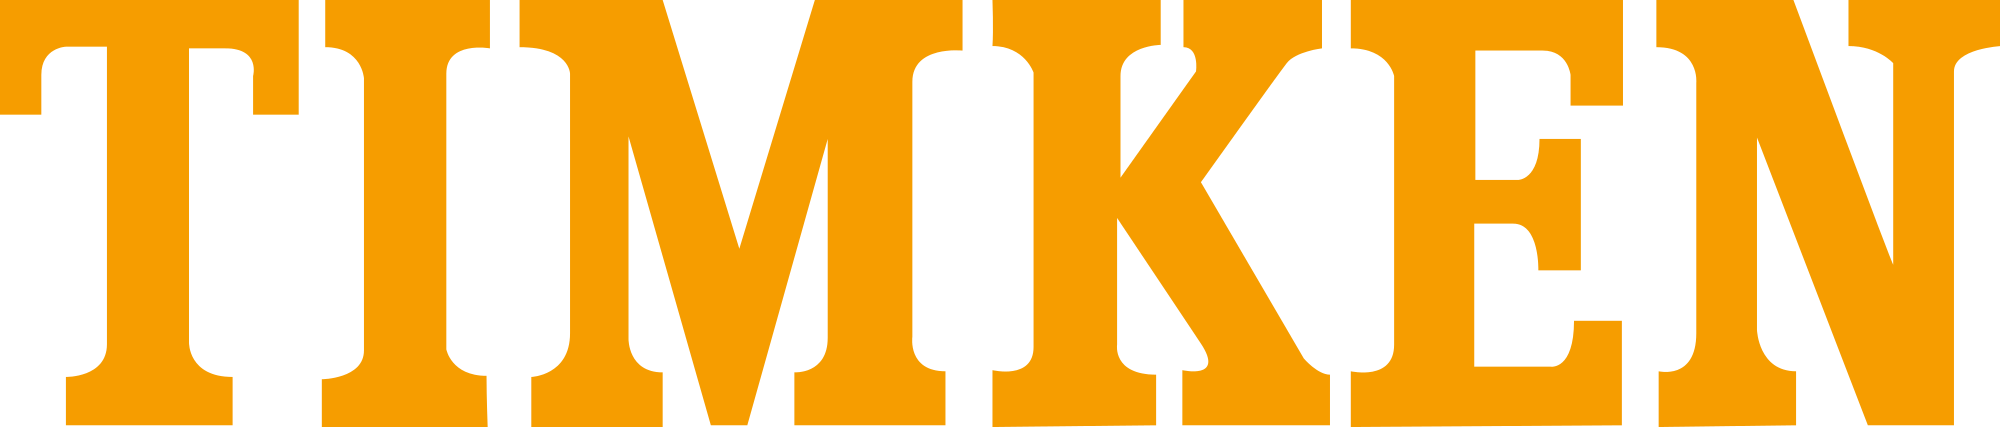 Timken Logo - Timken.svg